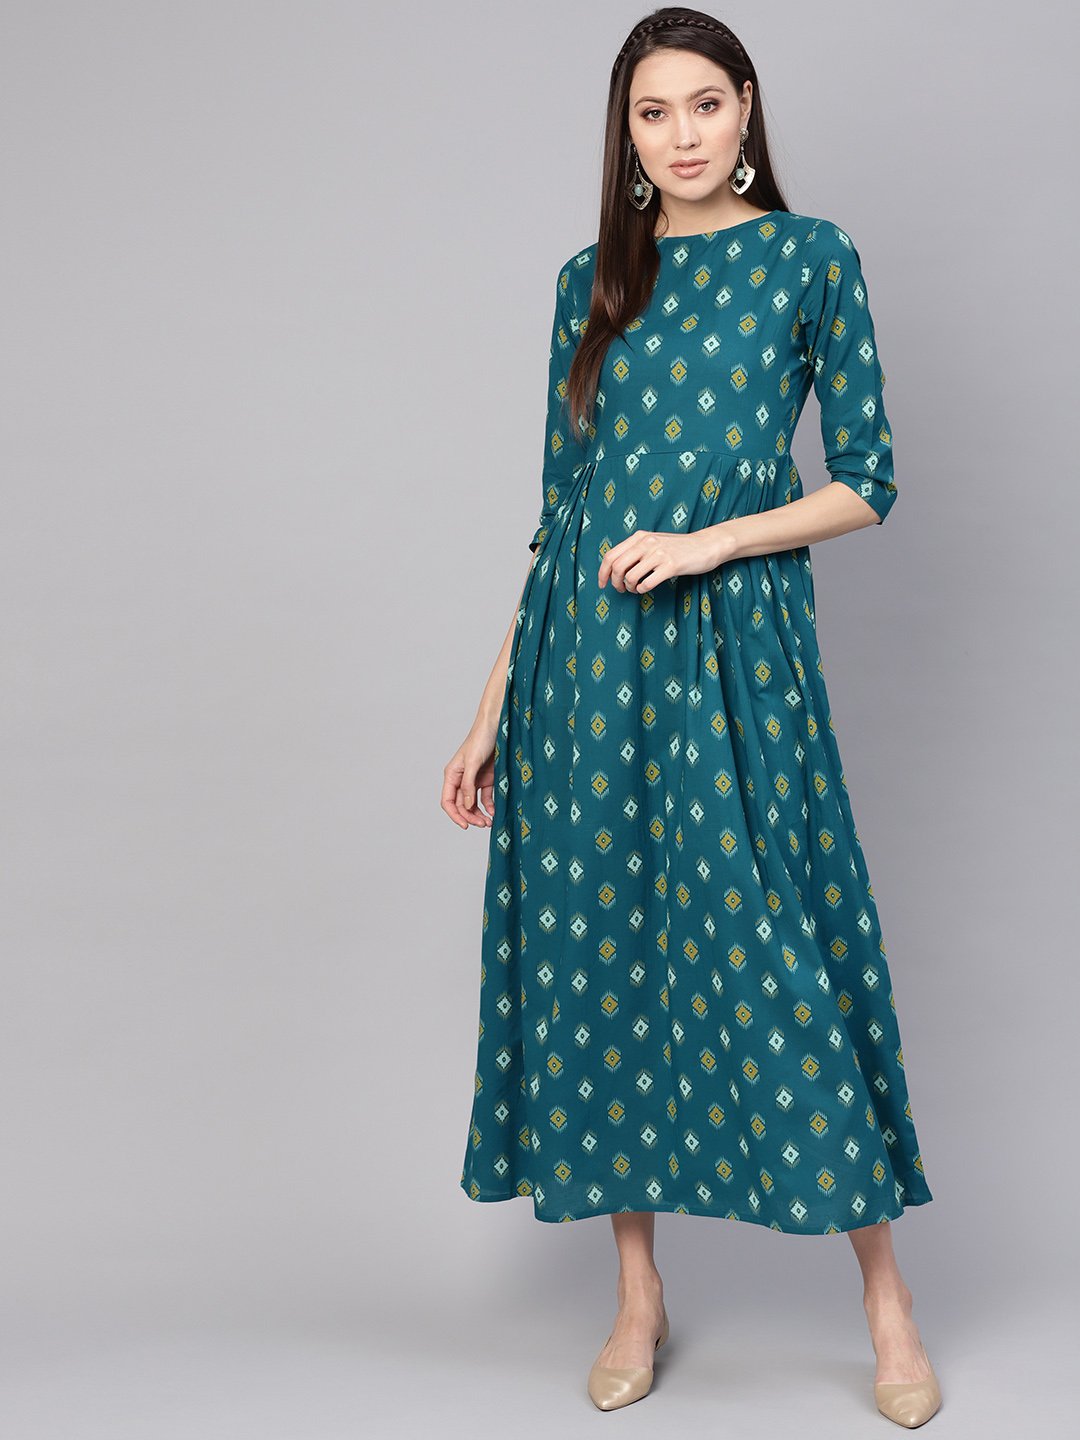 Women's Teal Blue & Yellow Printed Maxi Dress - Nayo Clothing